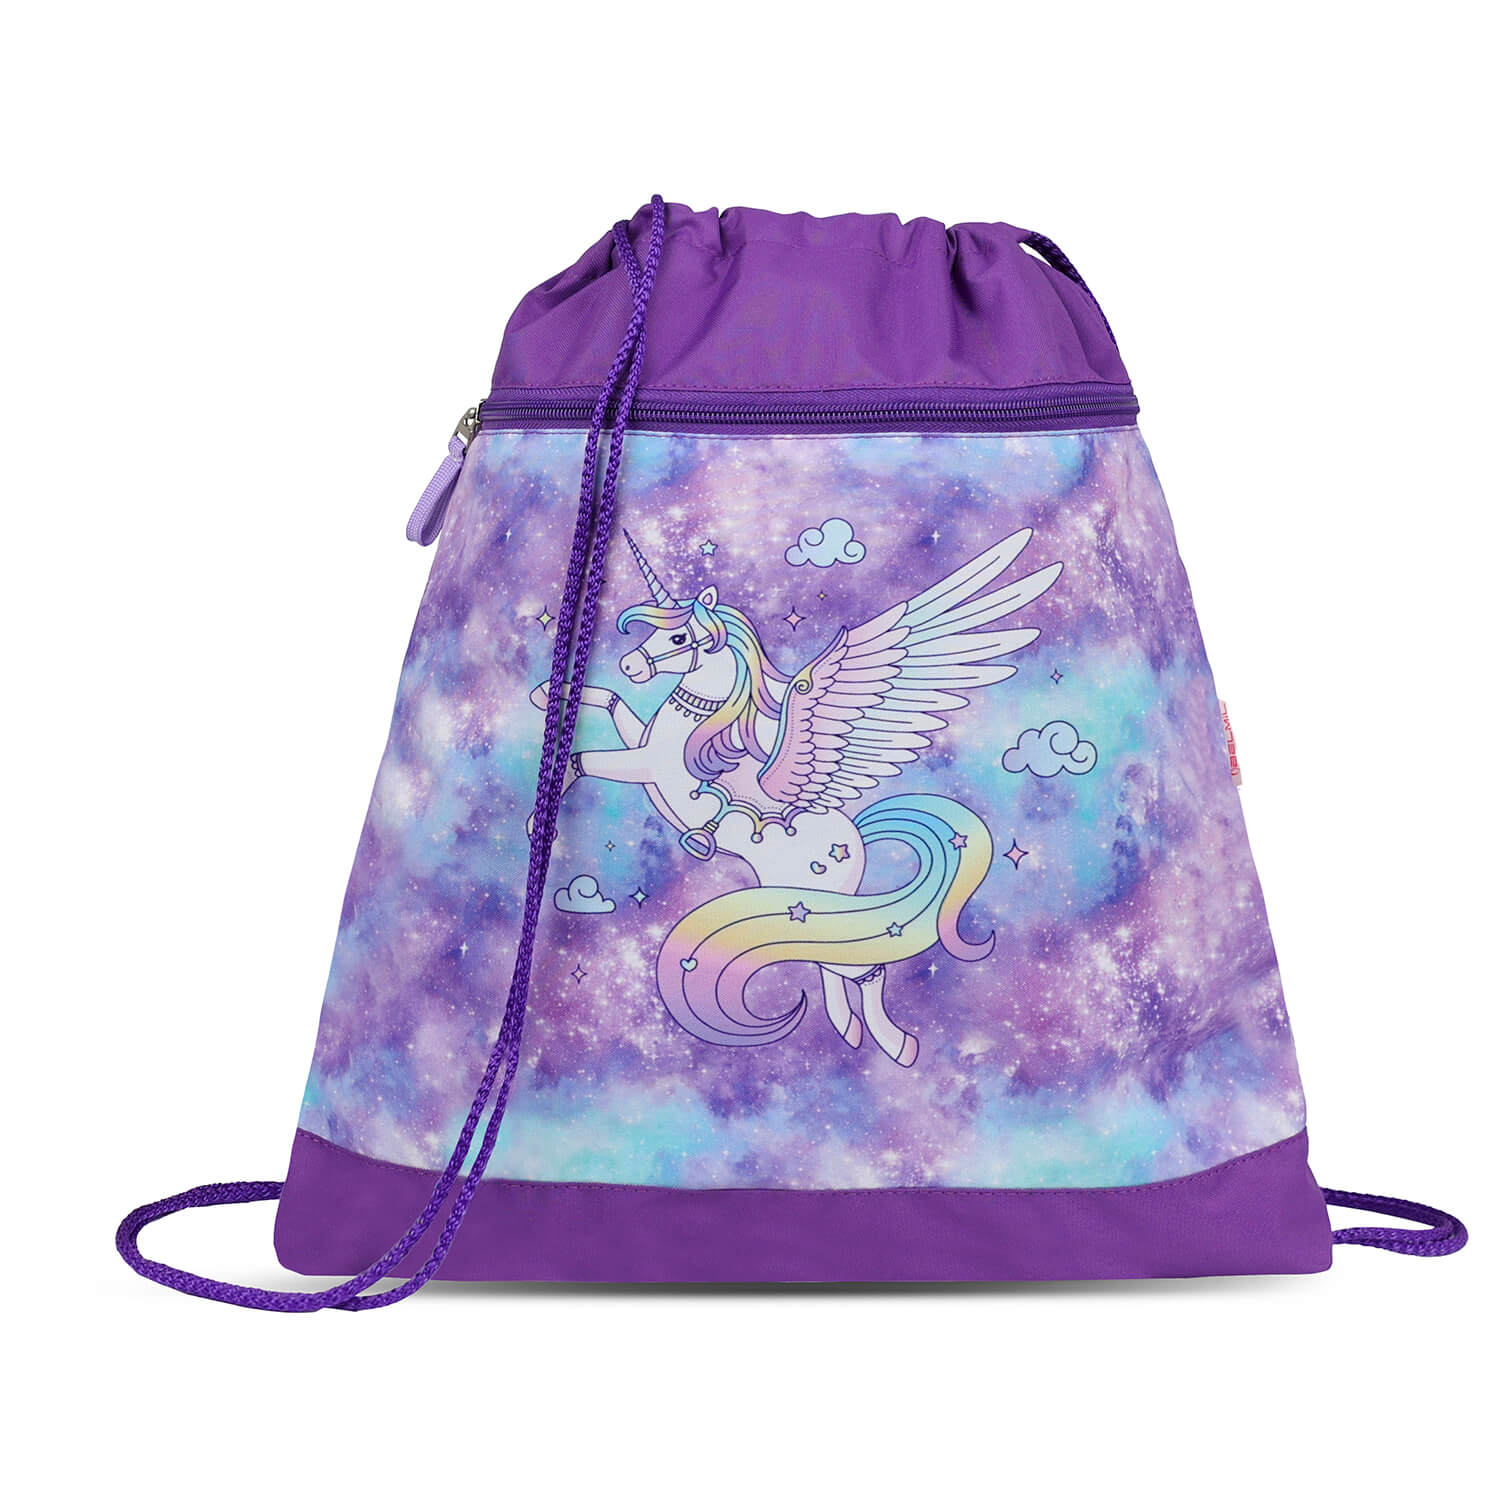 Classy Diamond Unicorn schoolbag set 4 pcs